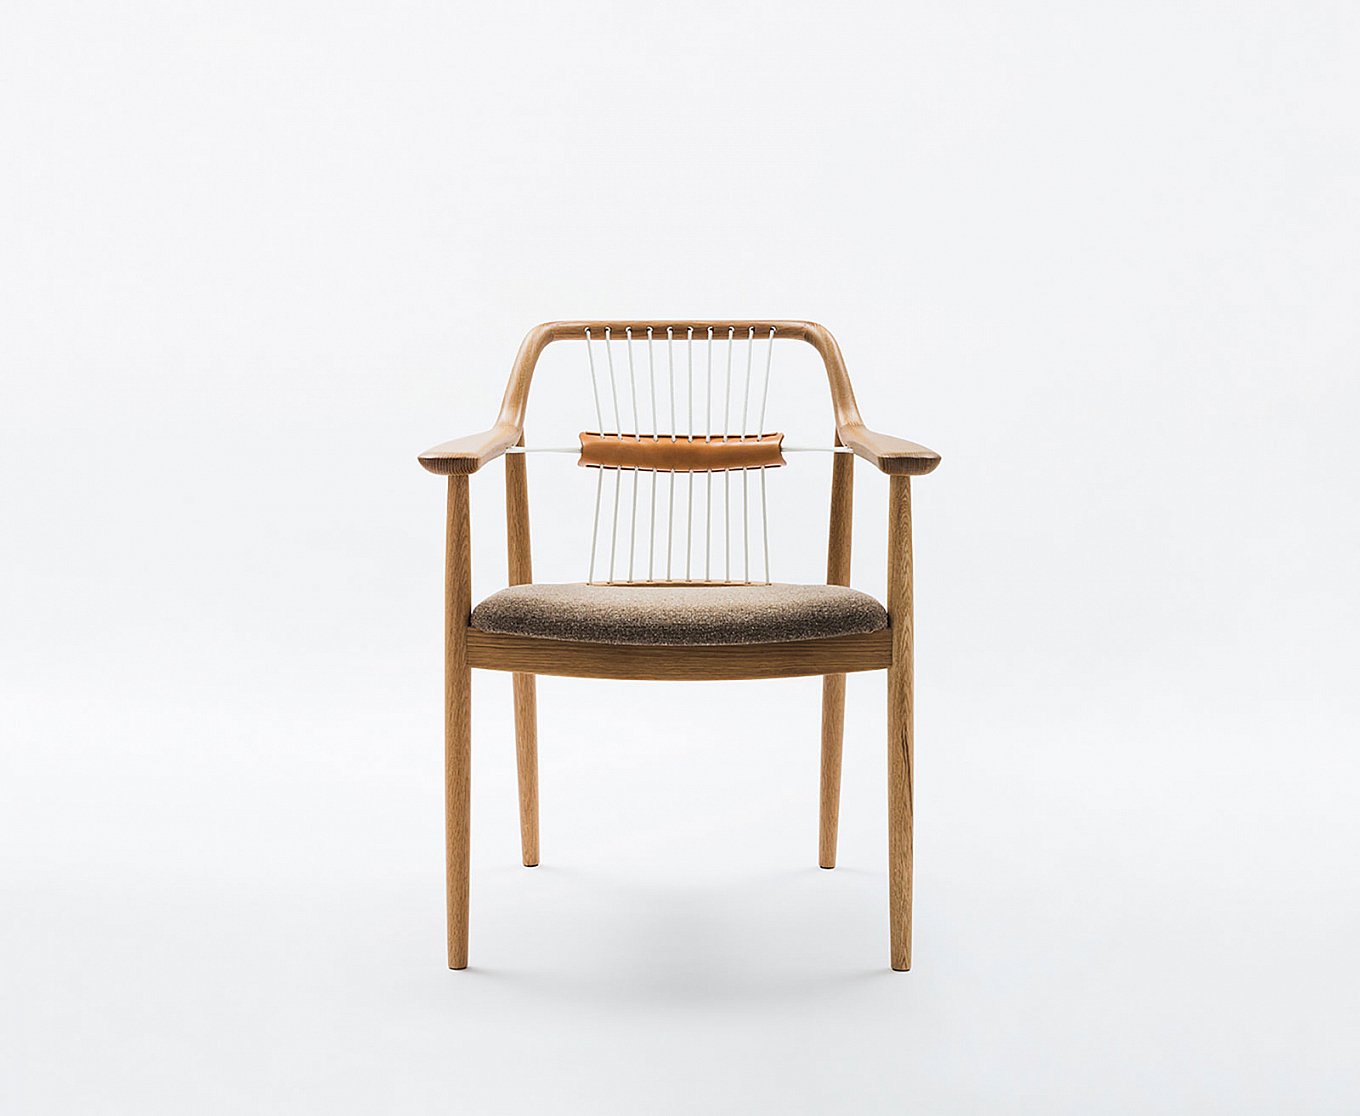 yc1-chair-by-mikiya-kobayashi-5